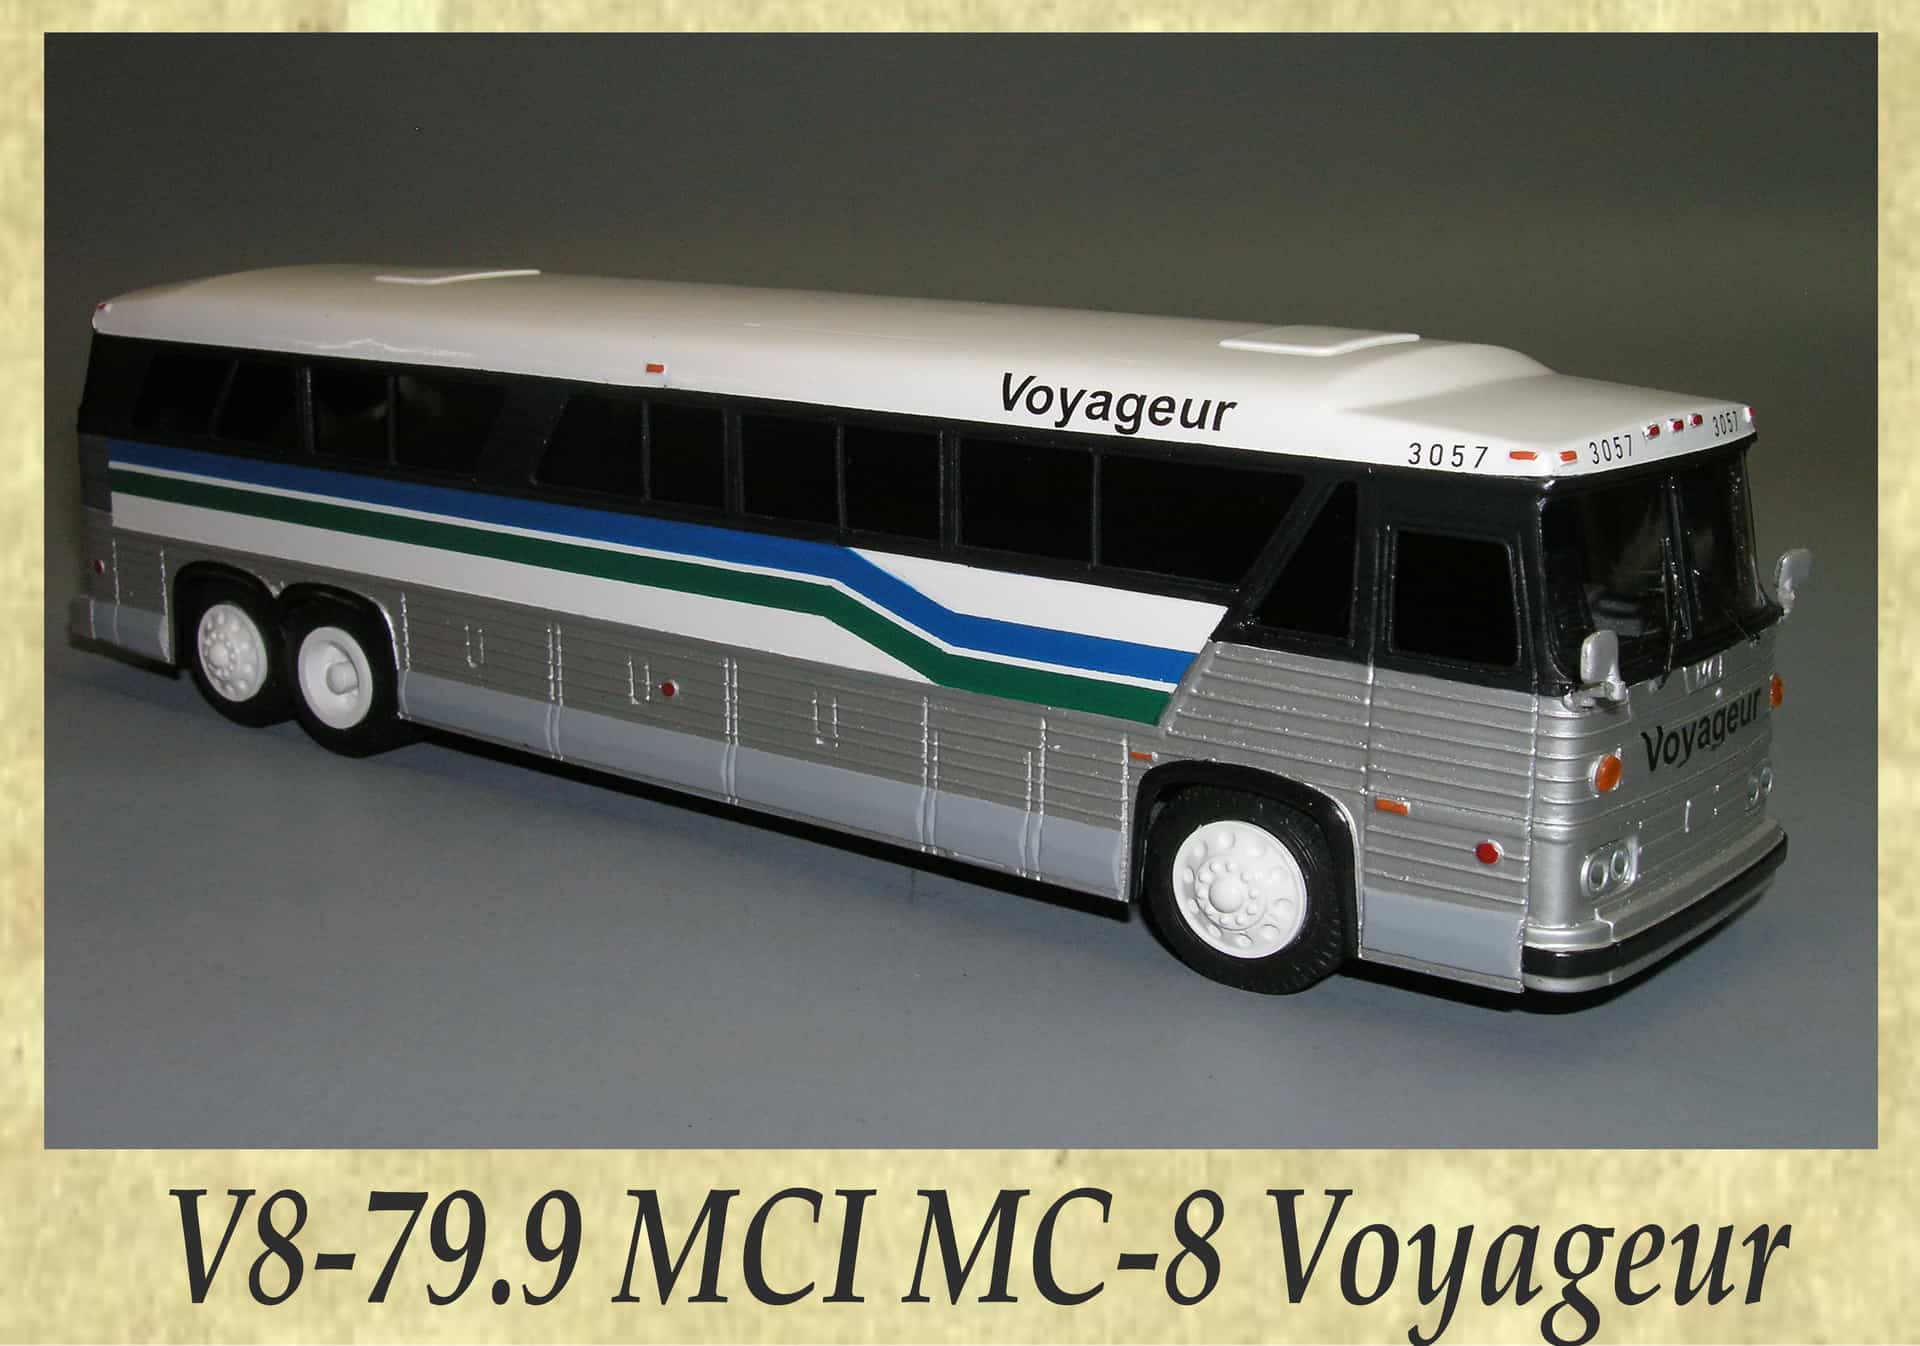 V8-79.9 MCI MC-8 Voyageur